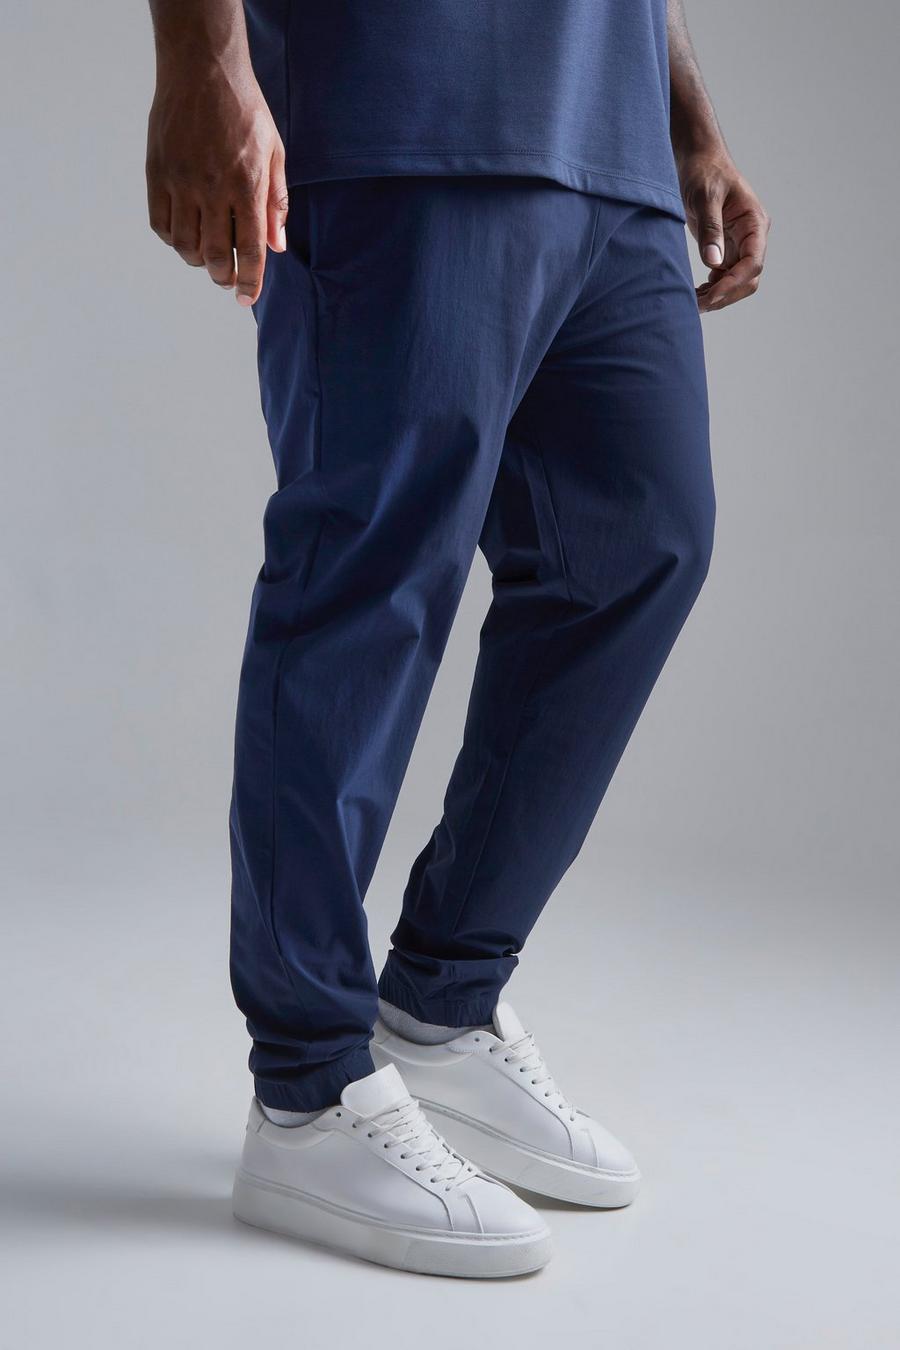 Pantaloni tecnici Plus Size Slim Fit con polsini alle caviglie, Navy azul marino image number 1